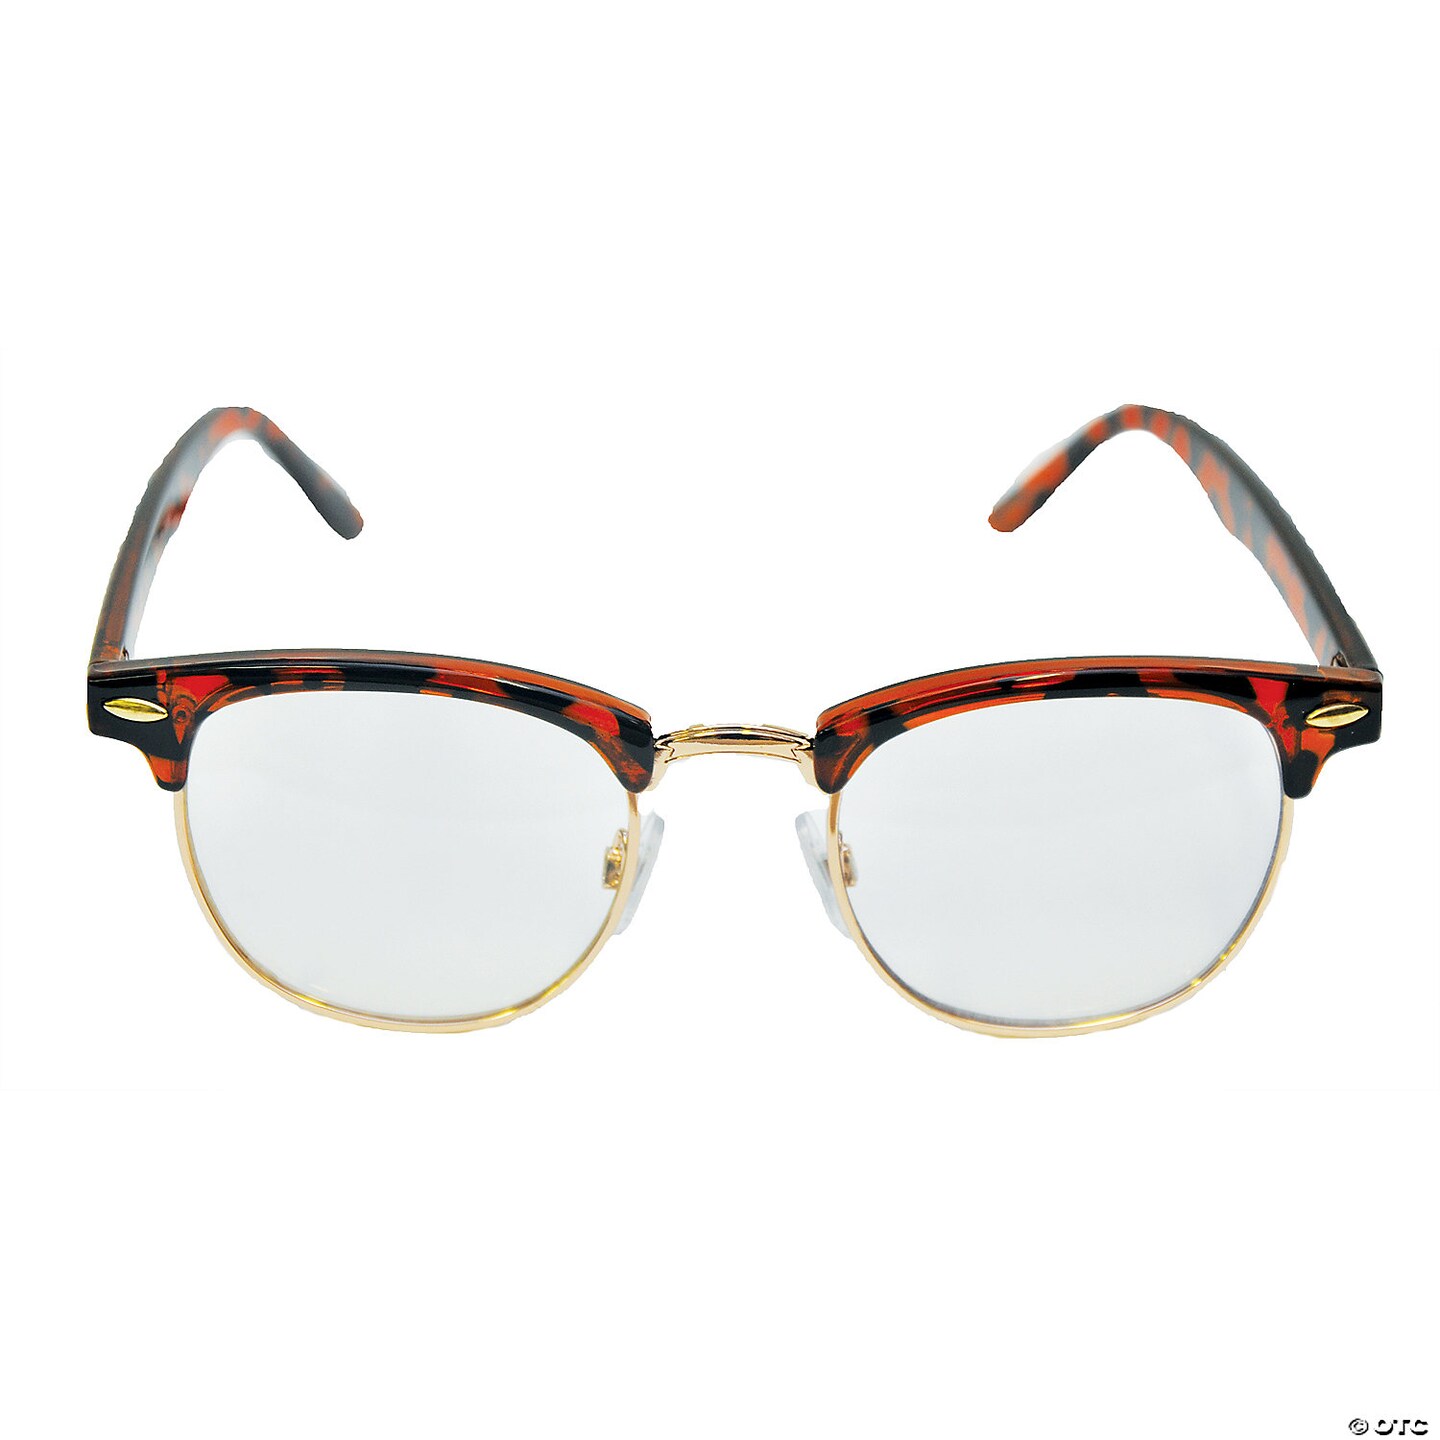 Adults Mr 50s Clear Glasses - 1 Pc.